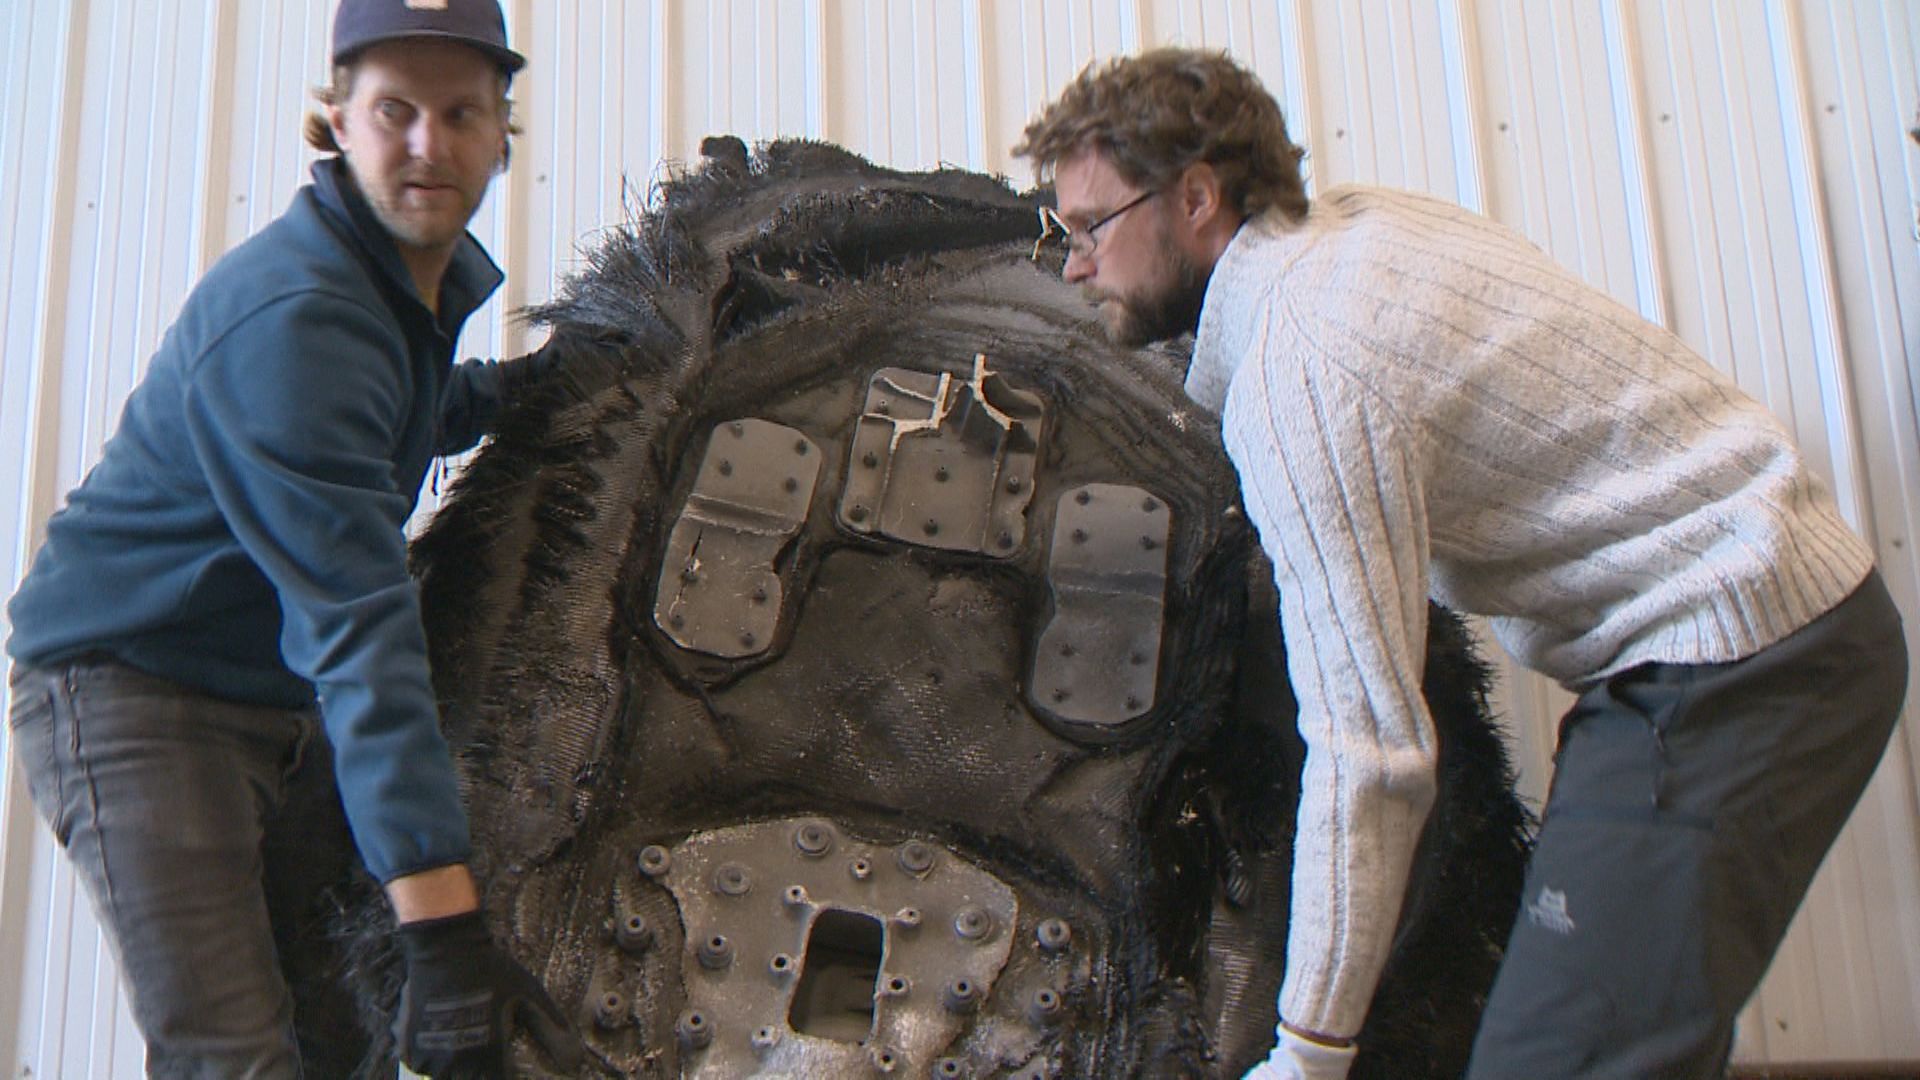 Space junk retrieved from Saskatchewan farm